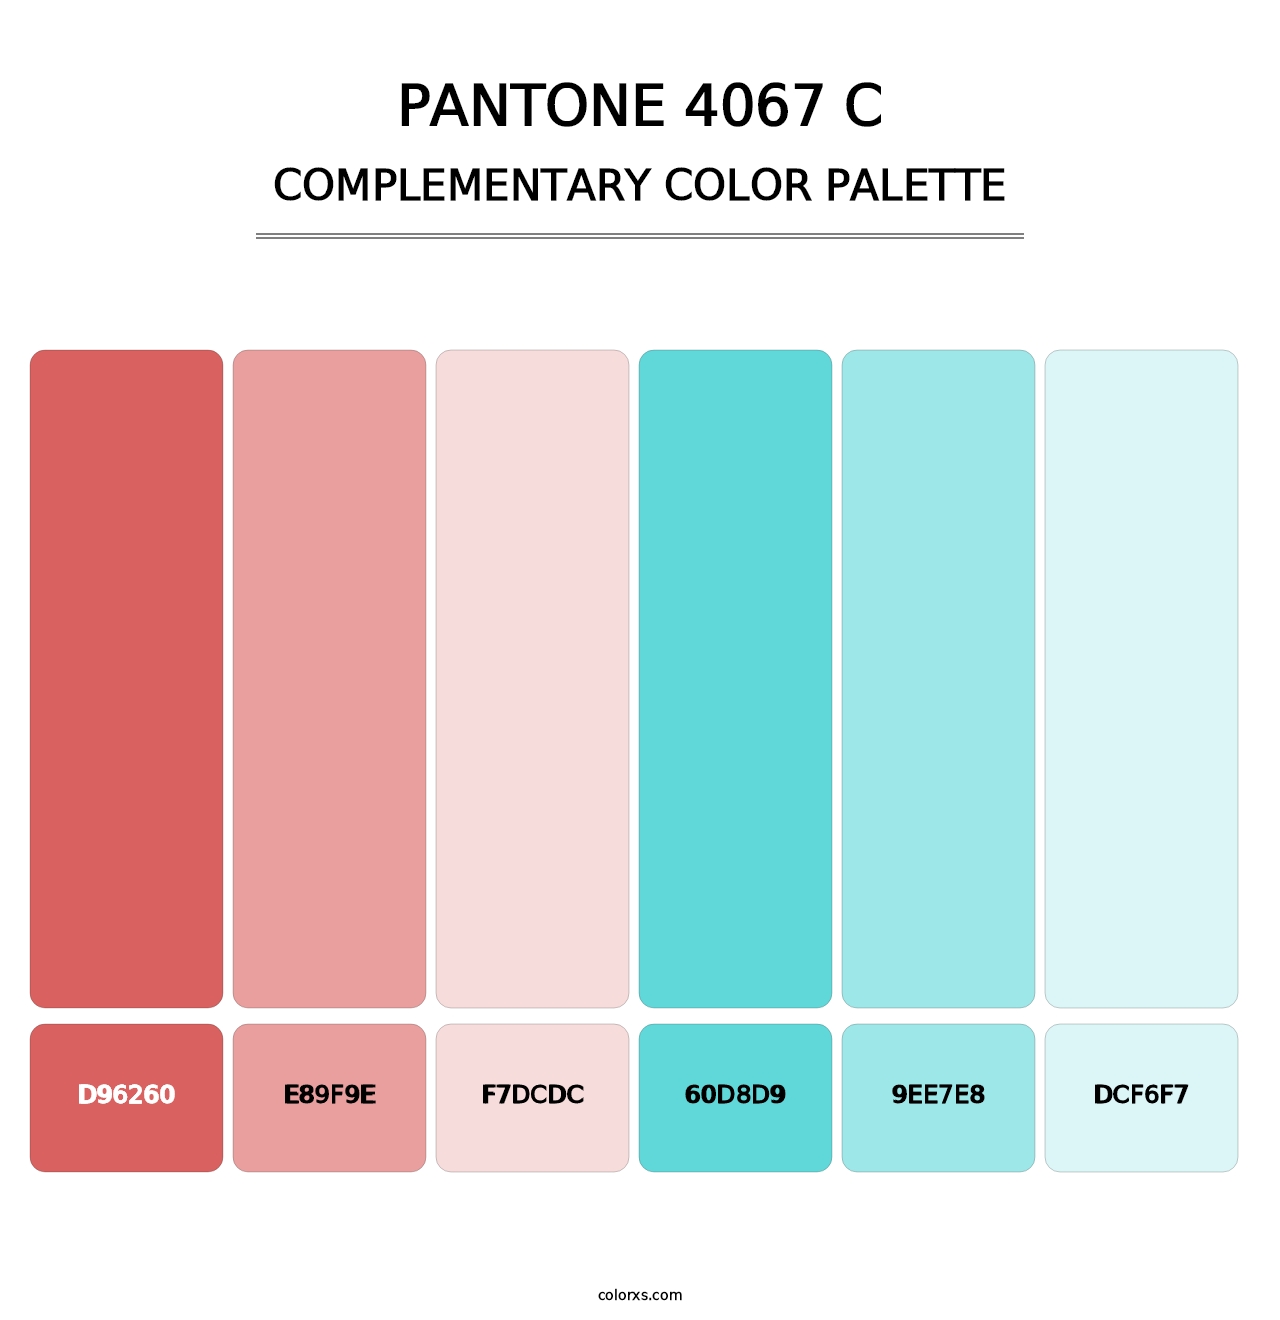 PANTONE 4067 C - Complementary Color Palette